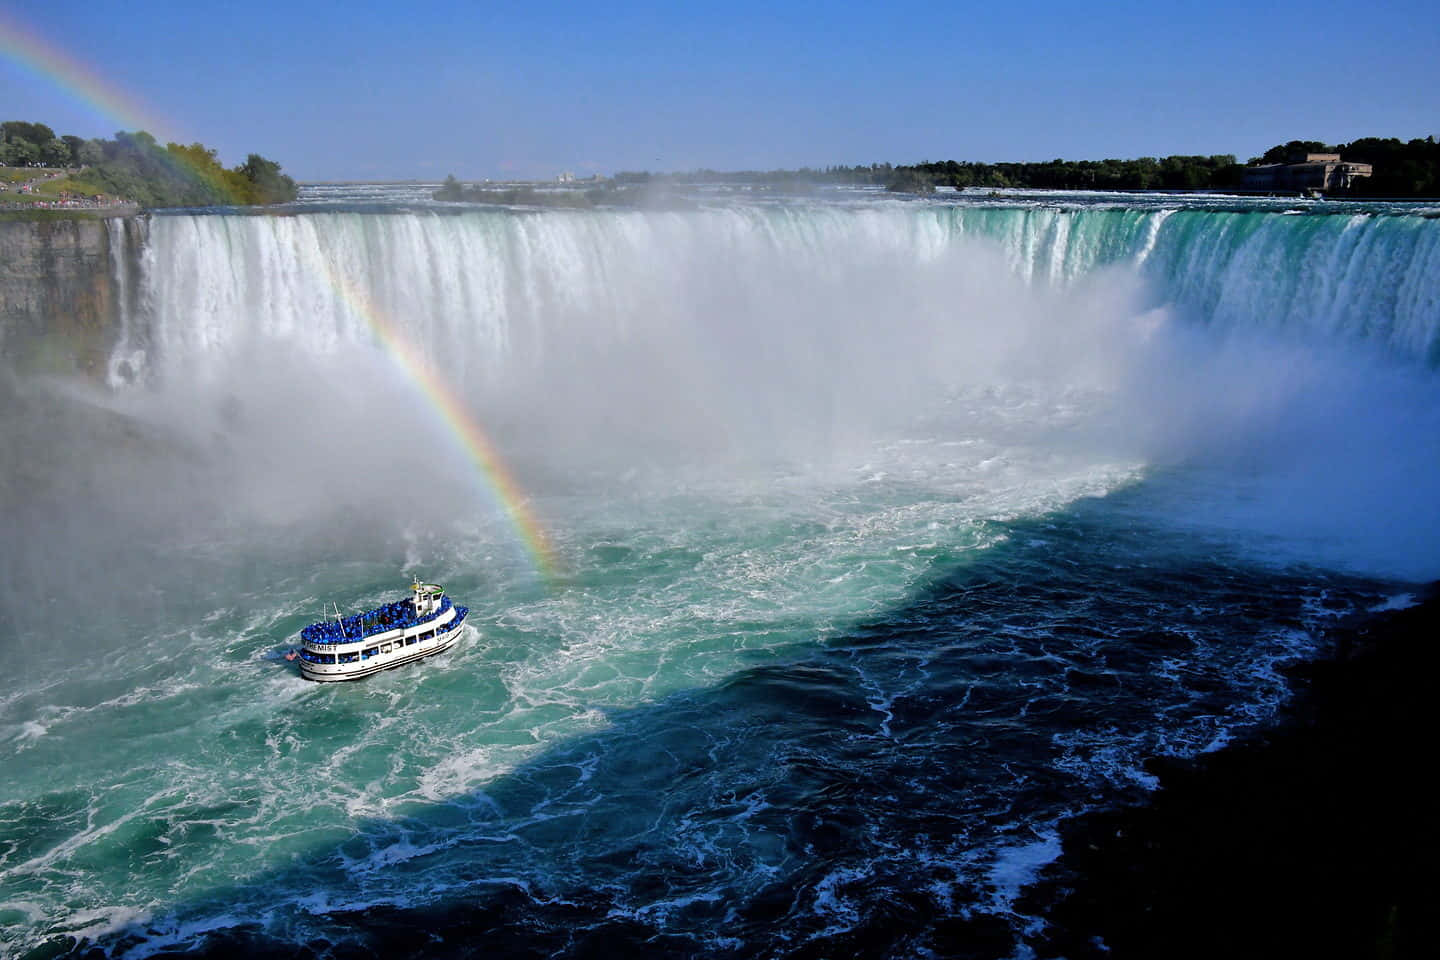 The majestic beauty of Niagara Falls